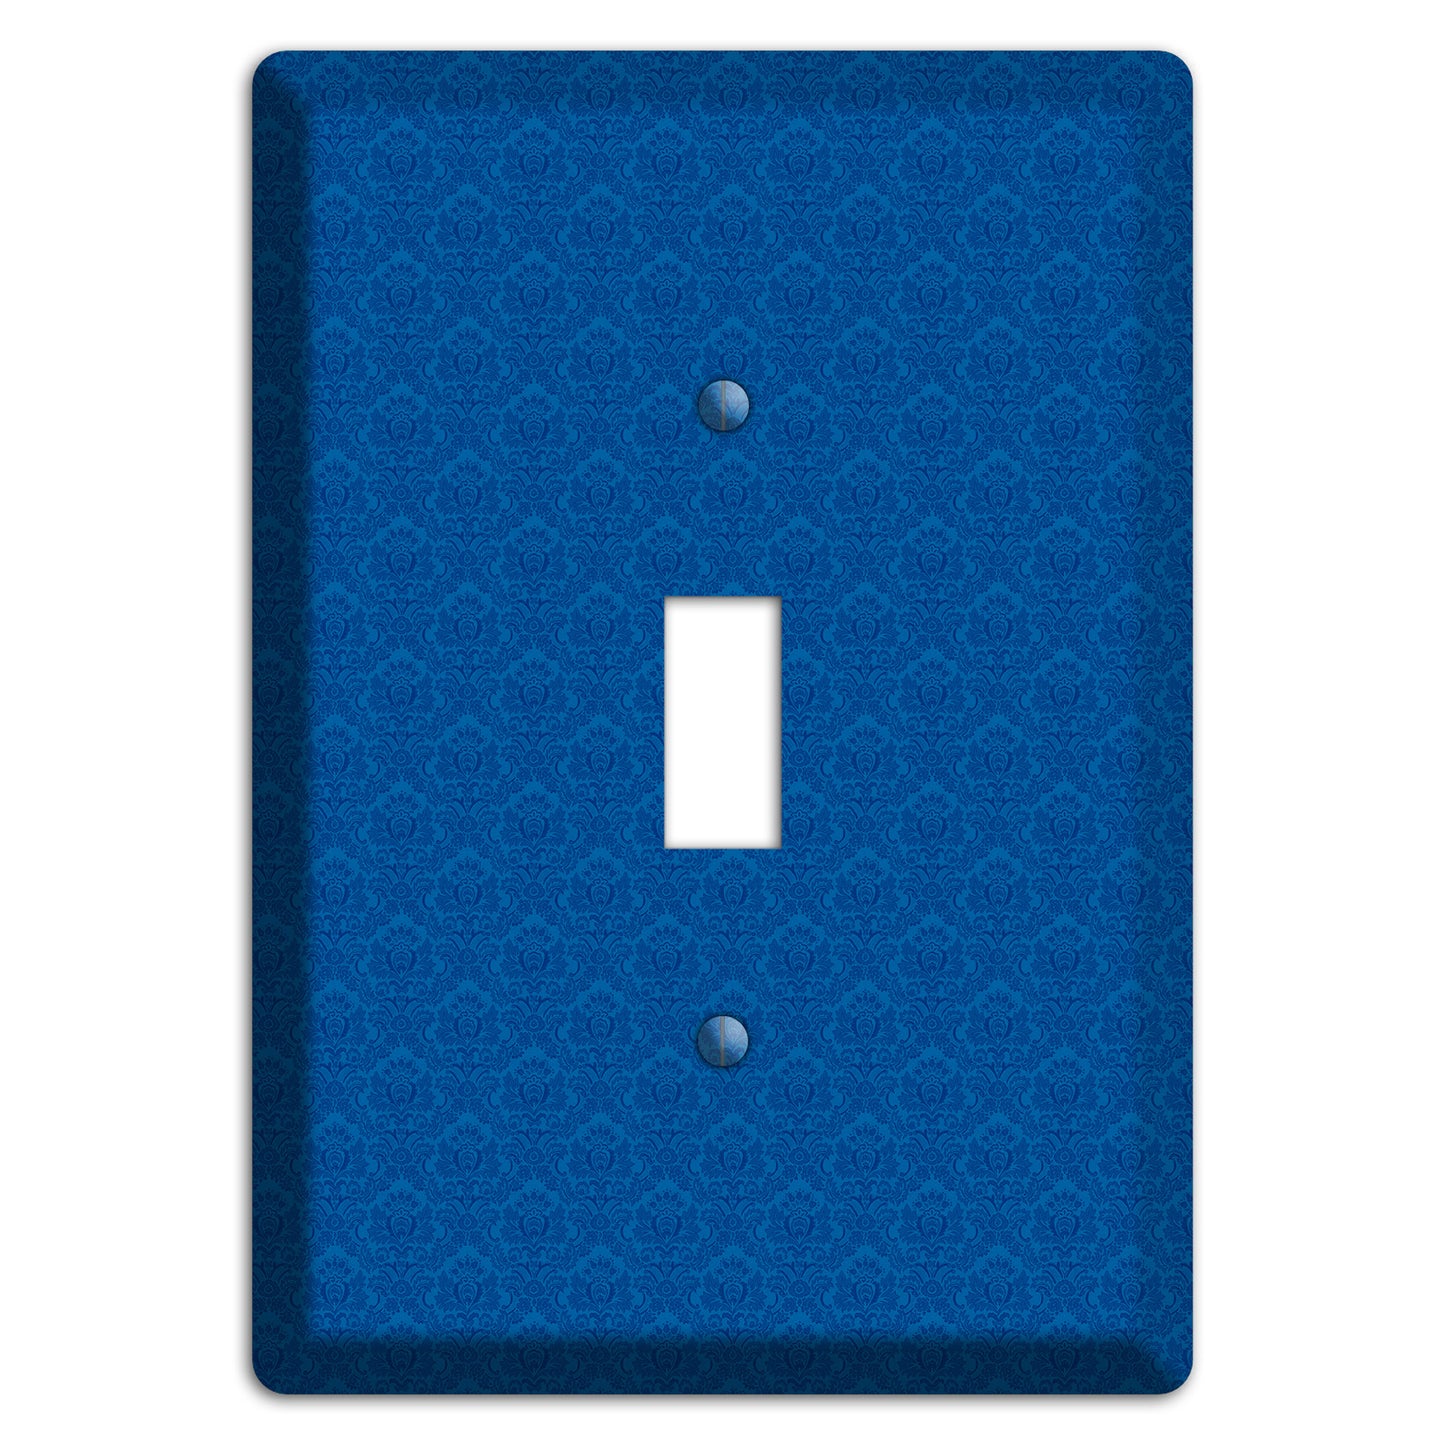 Blue Cartouche Cover Plates